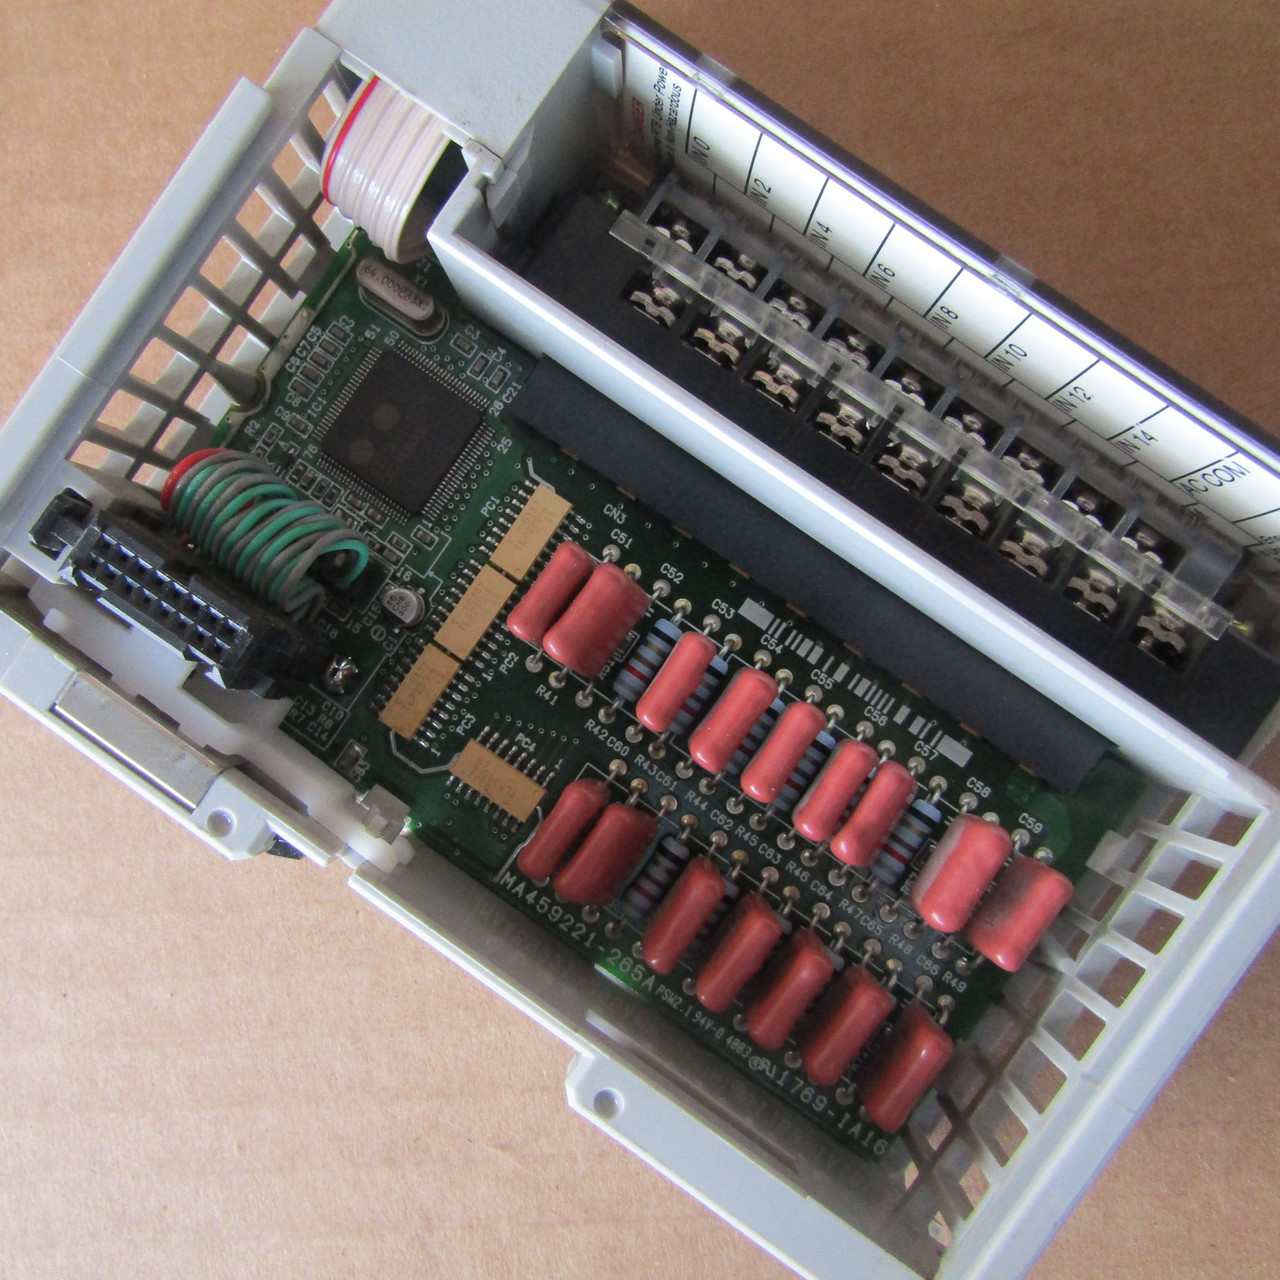 Allen-Bradley 1769-IA16 Compact I/O 16 Pt Input Module, 5VDC, Series A, Rev 1 - Used